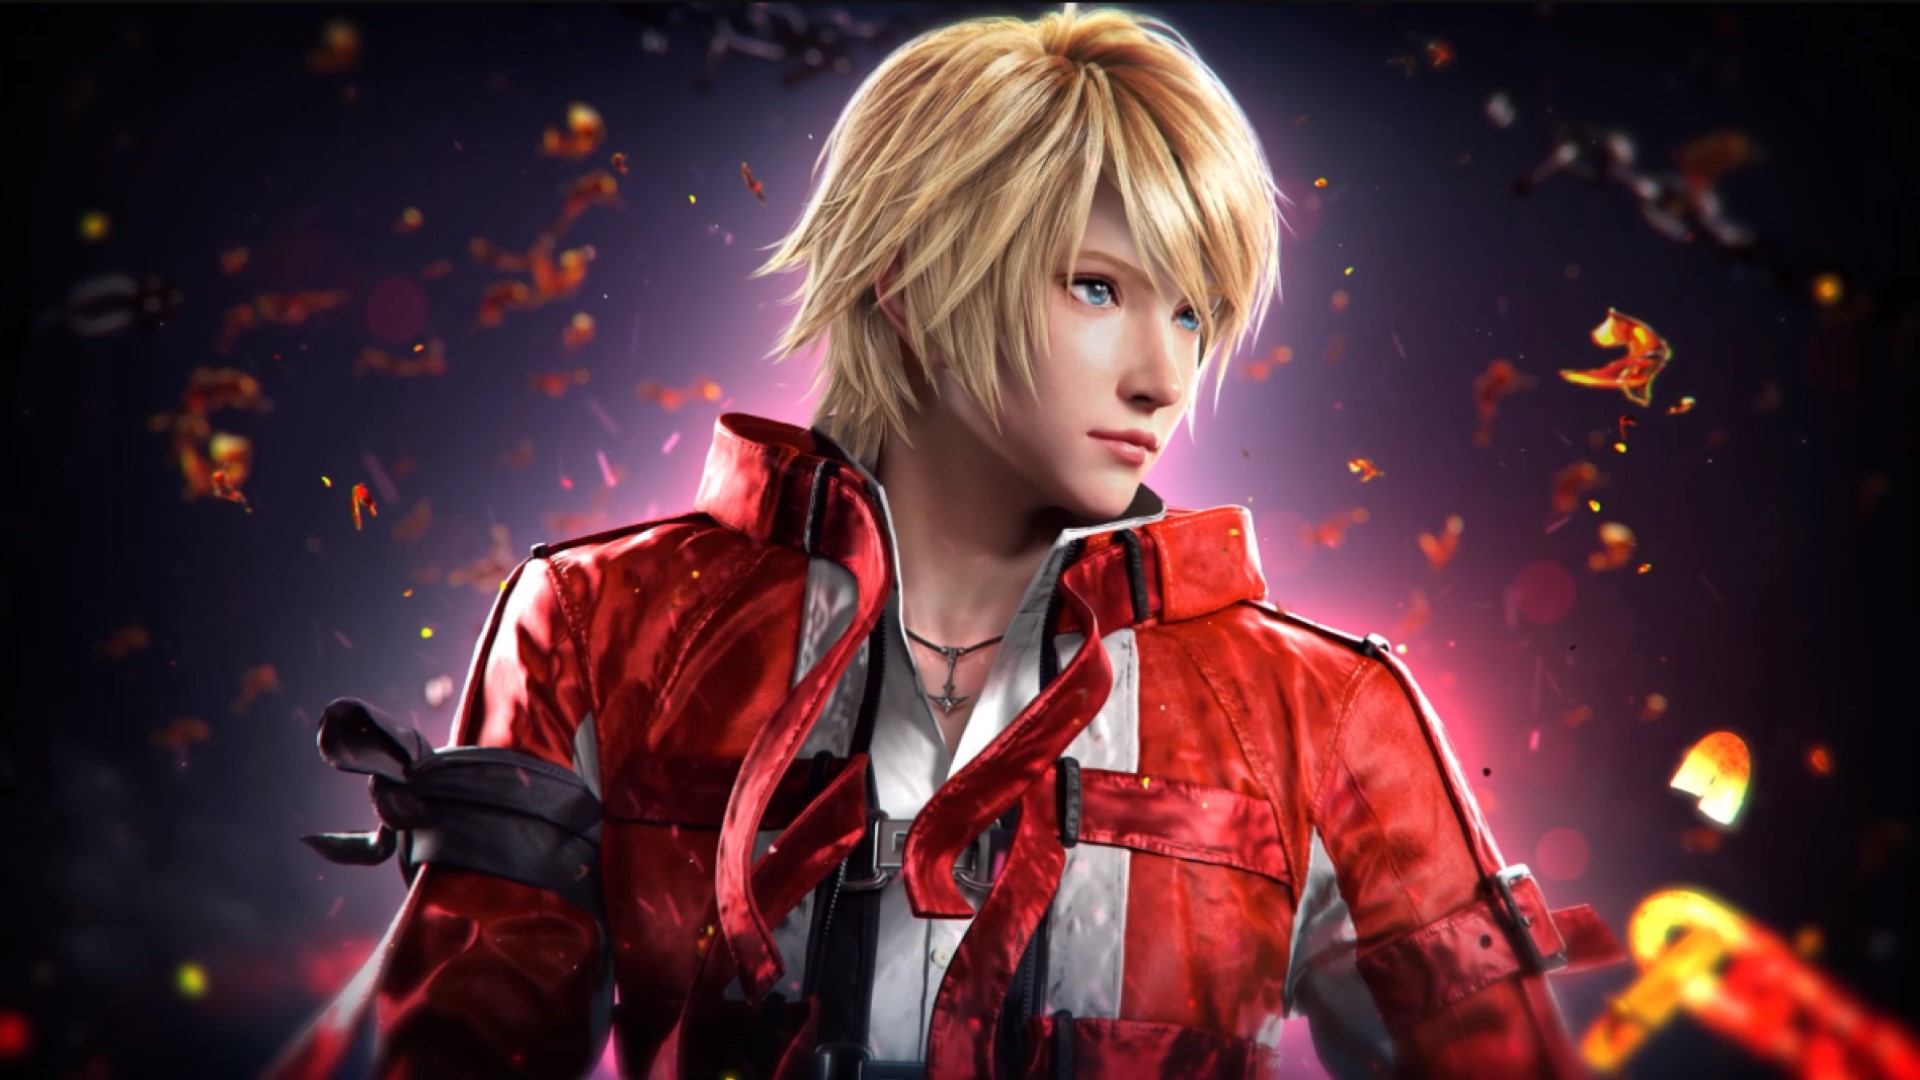 Tekken 8 Trailer Shines a Spotlight on Leo